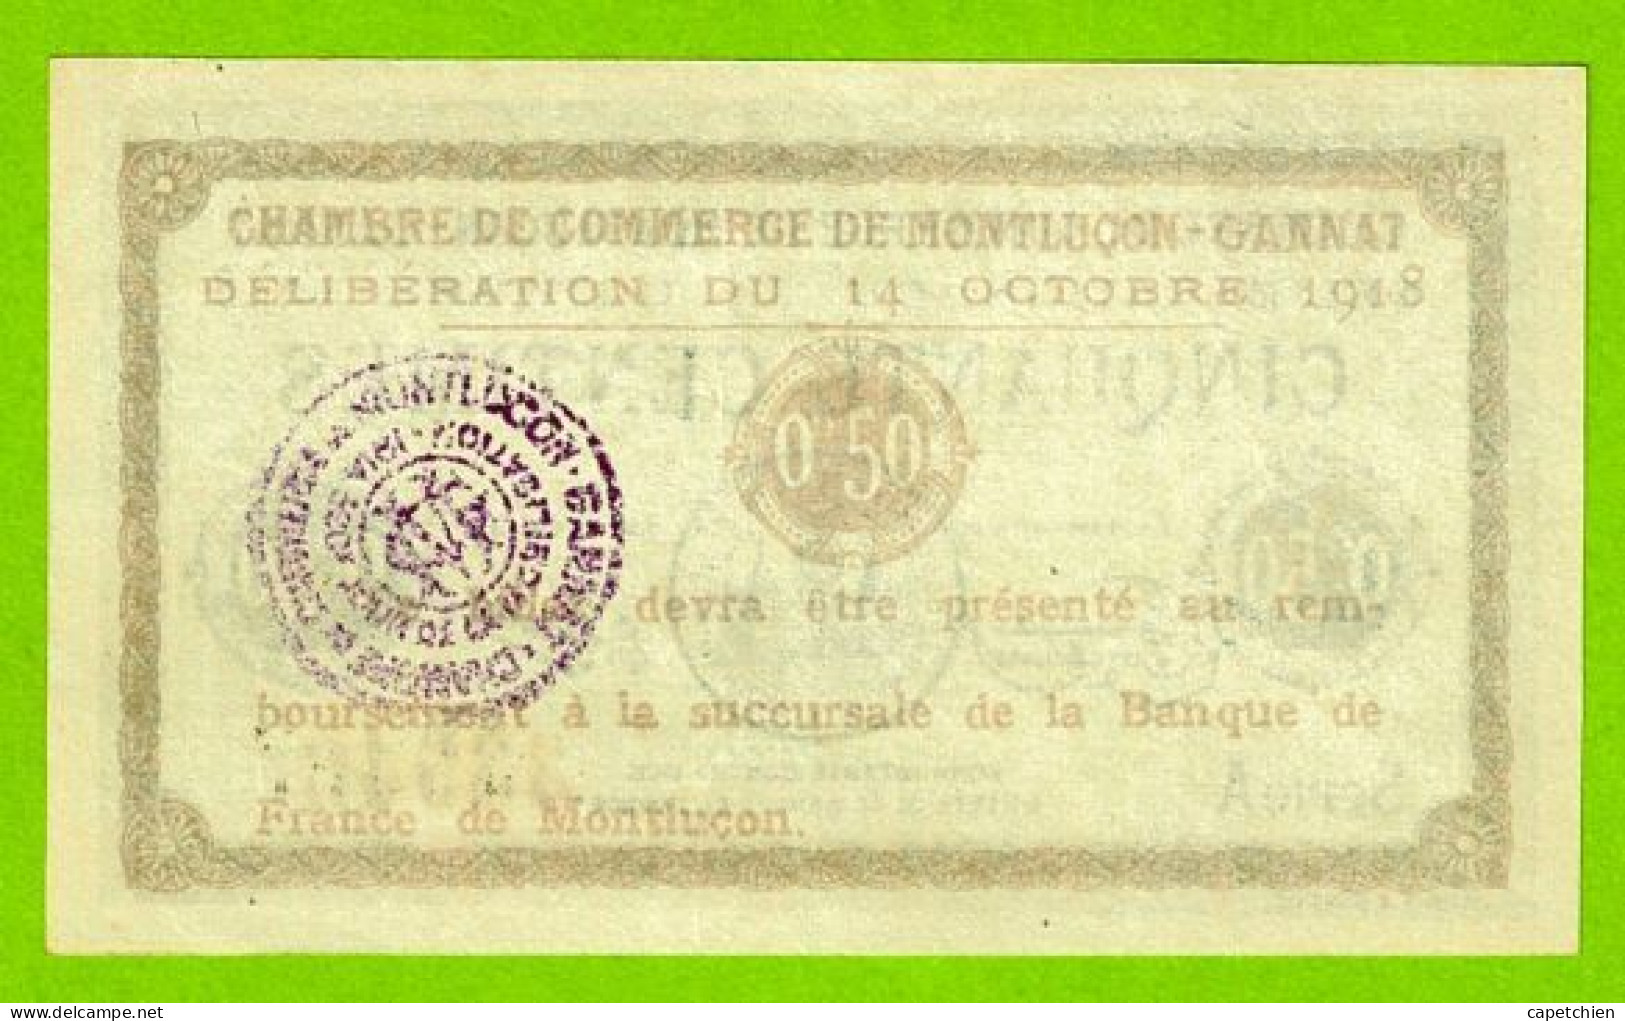 FRANCE / CHAMBRE De COMMERCE De MONTLUÇON - GANNAT /50 CENTIMES / 14 OCTOBRE 1918  N° 33946 / SERIE A / NEUF - Handelskammer